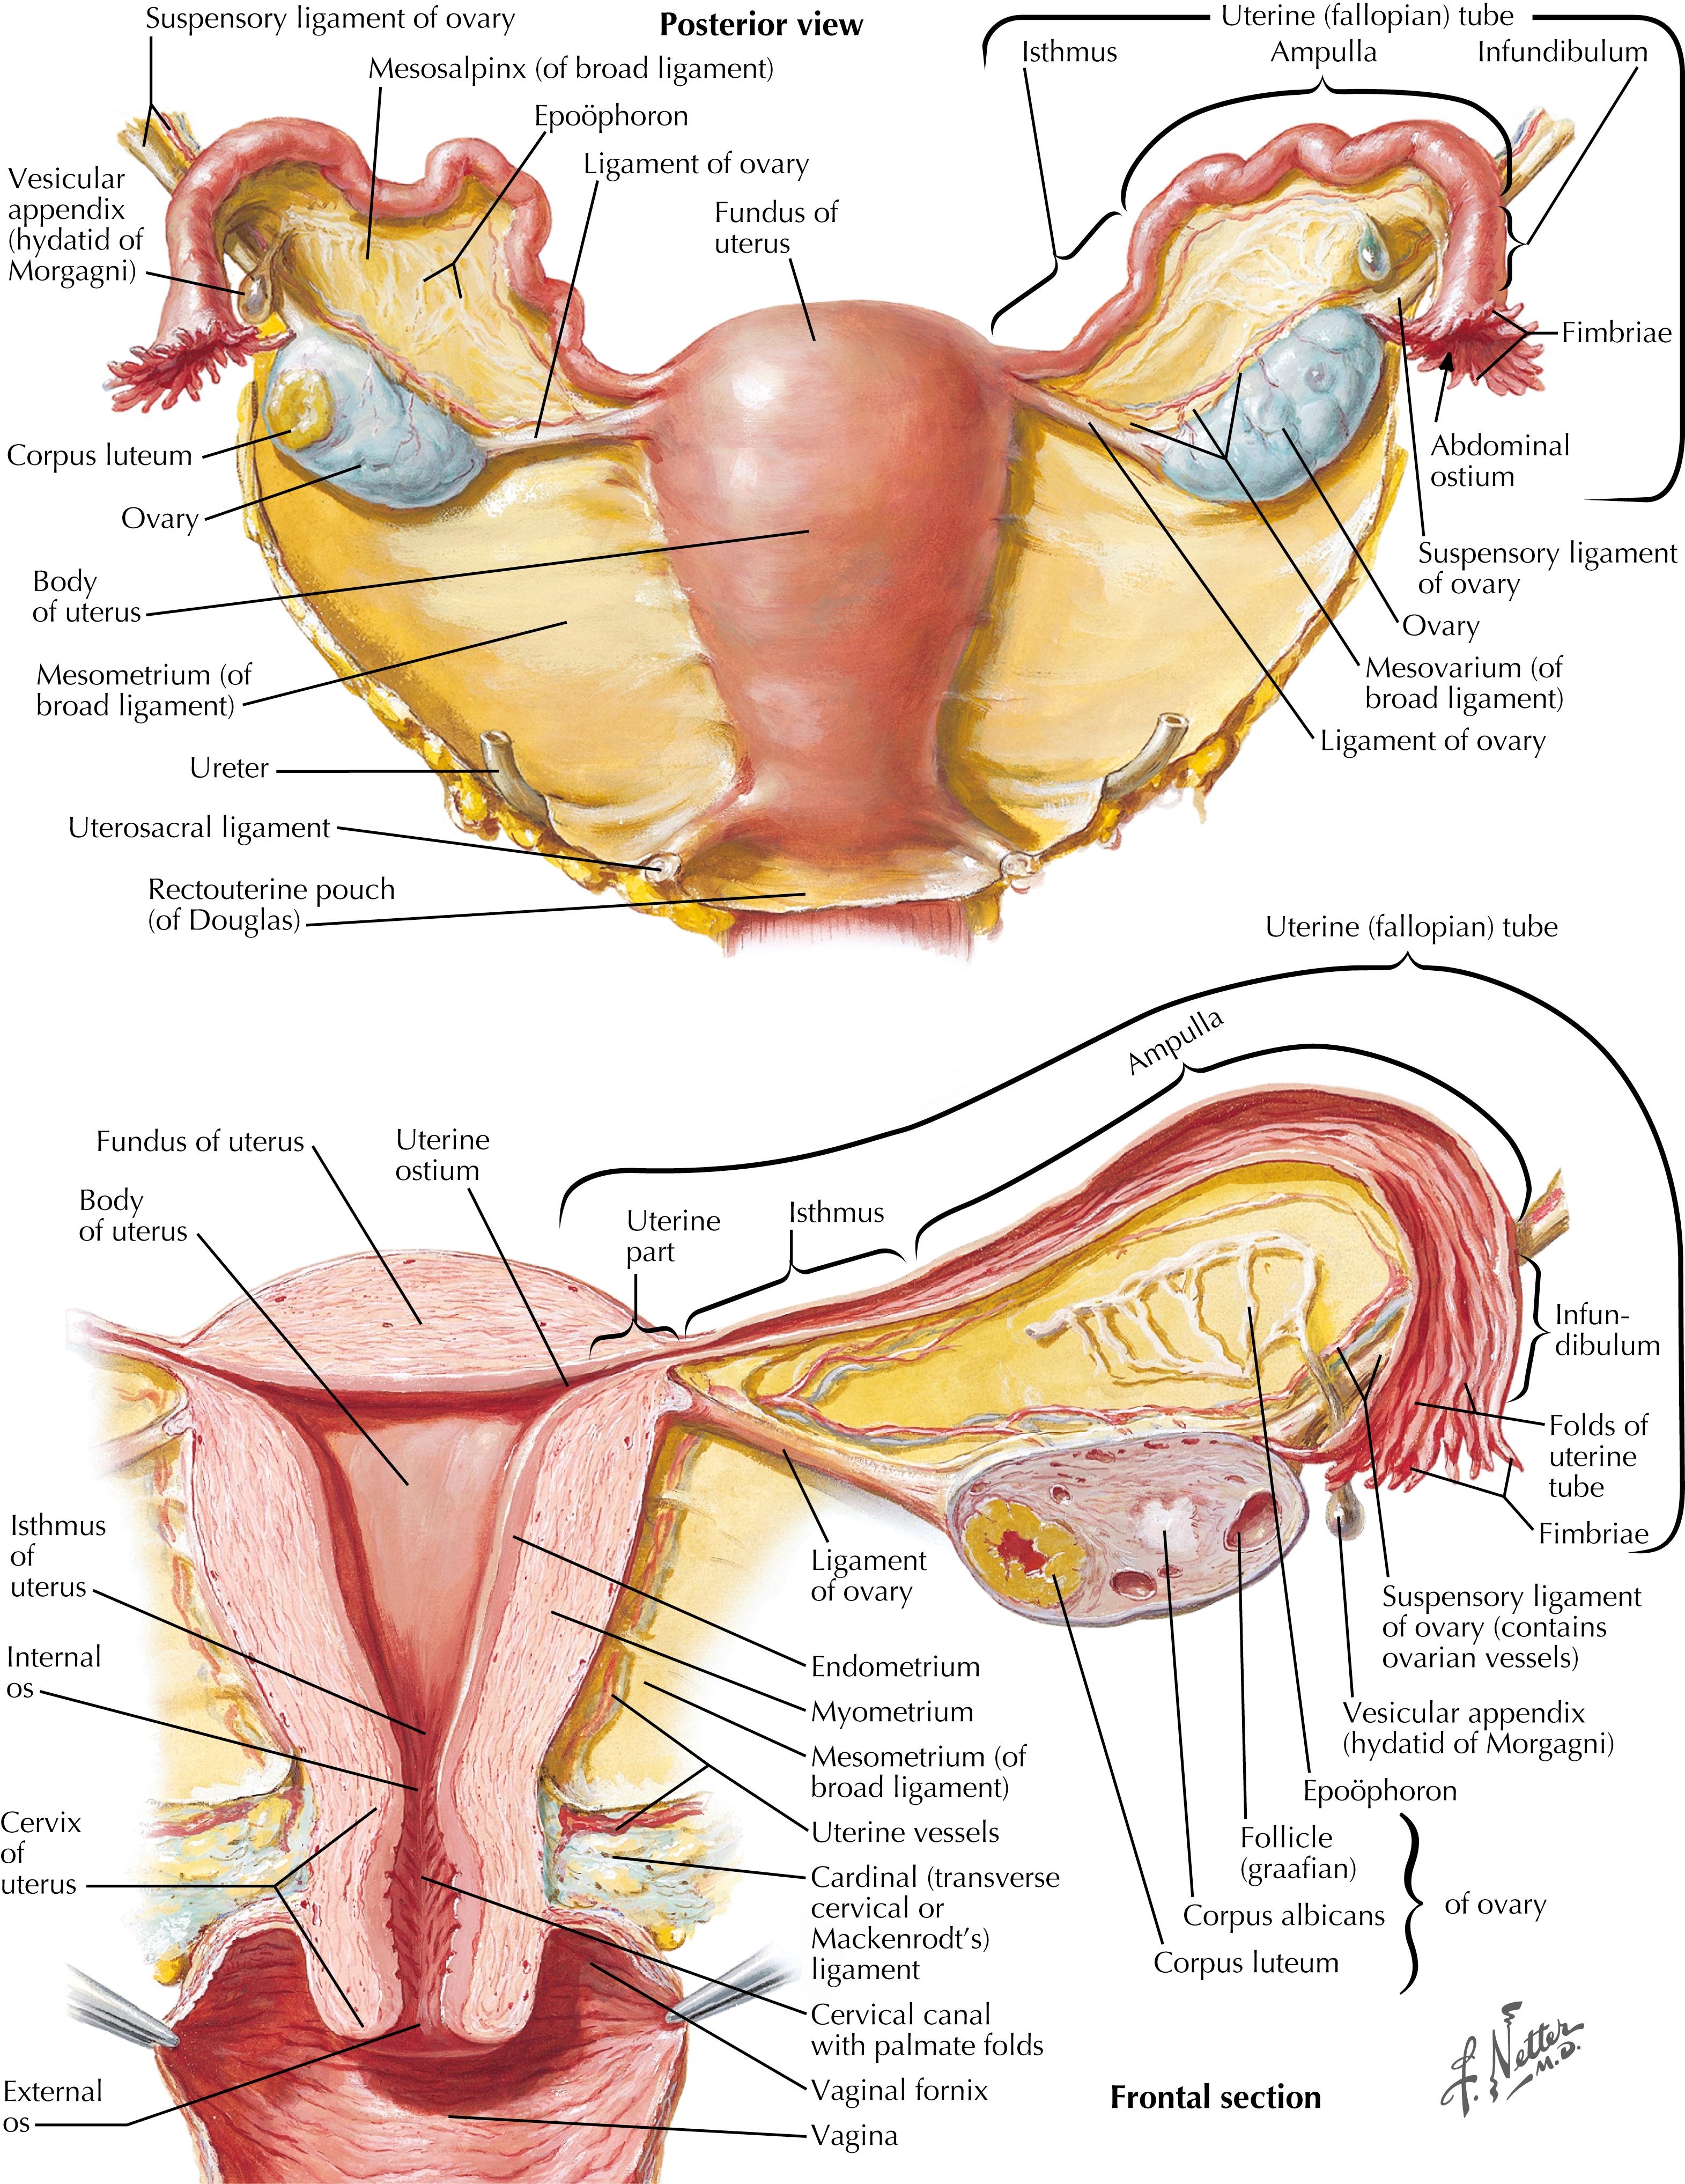 FIGURE 62.2, Uterus, ovaries, and fallopian tubes.